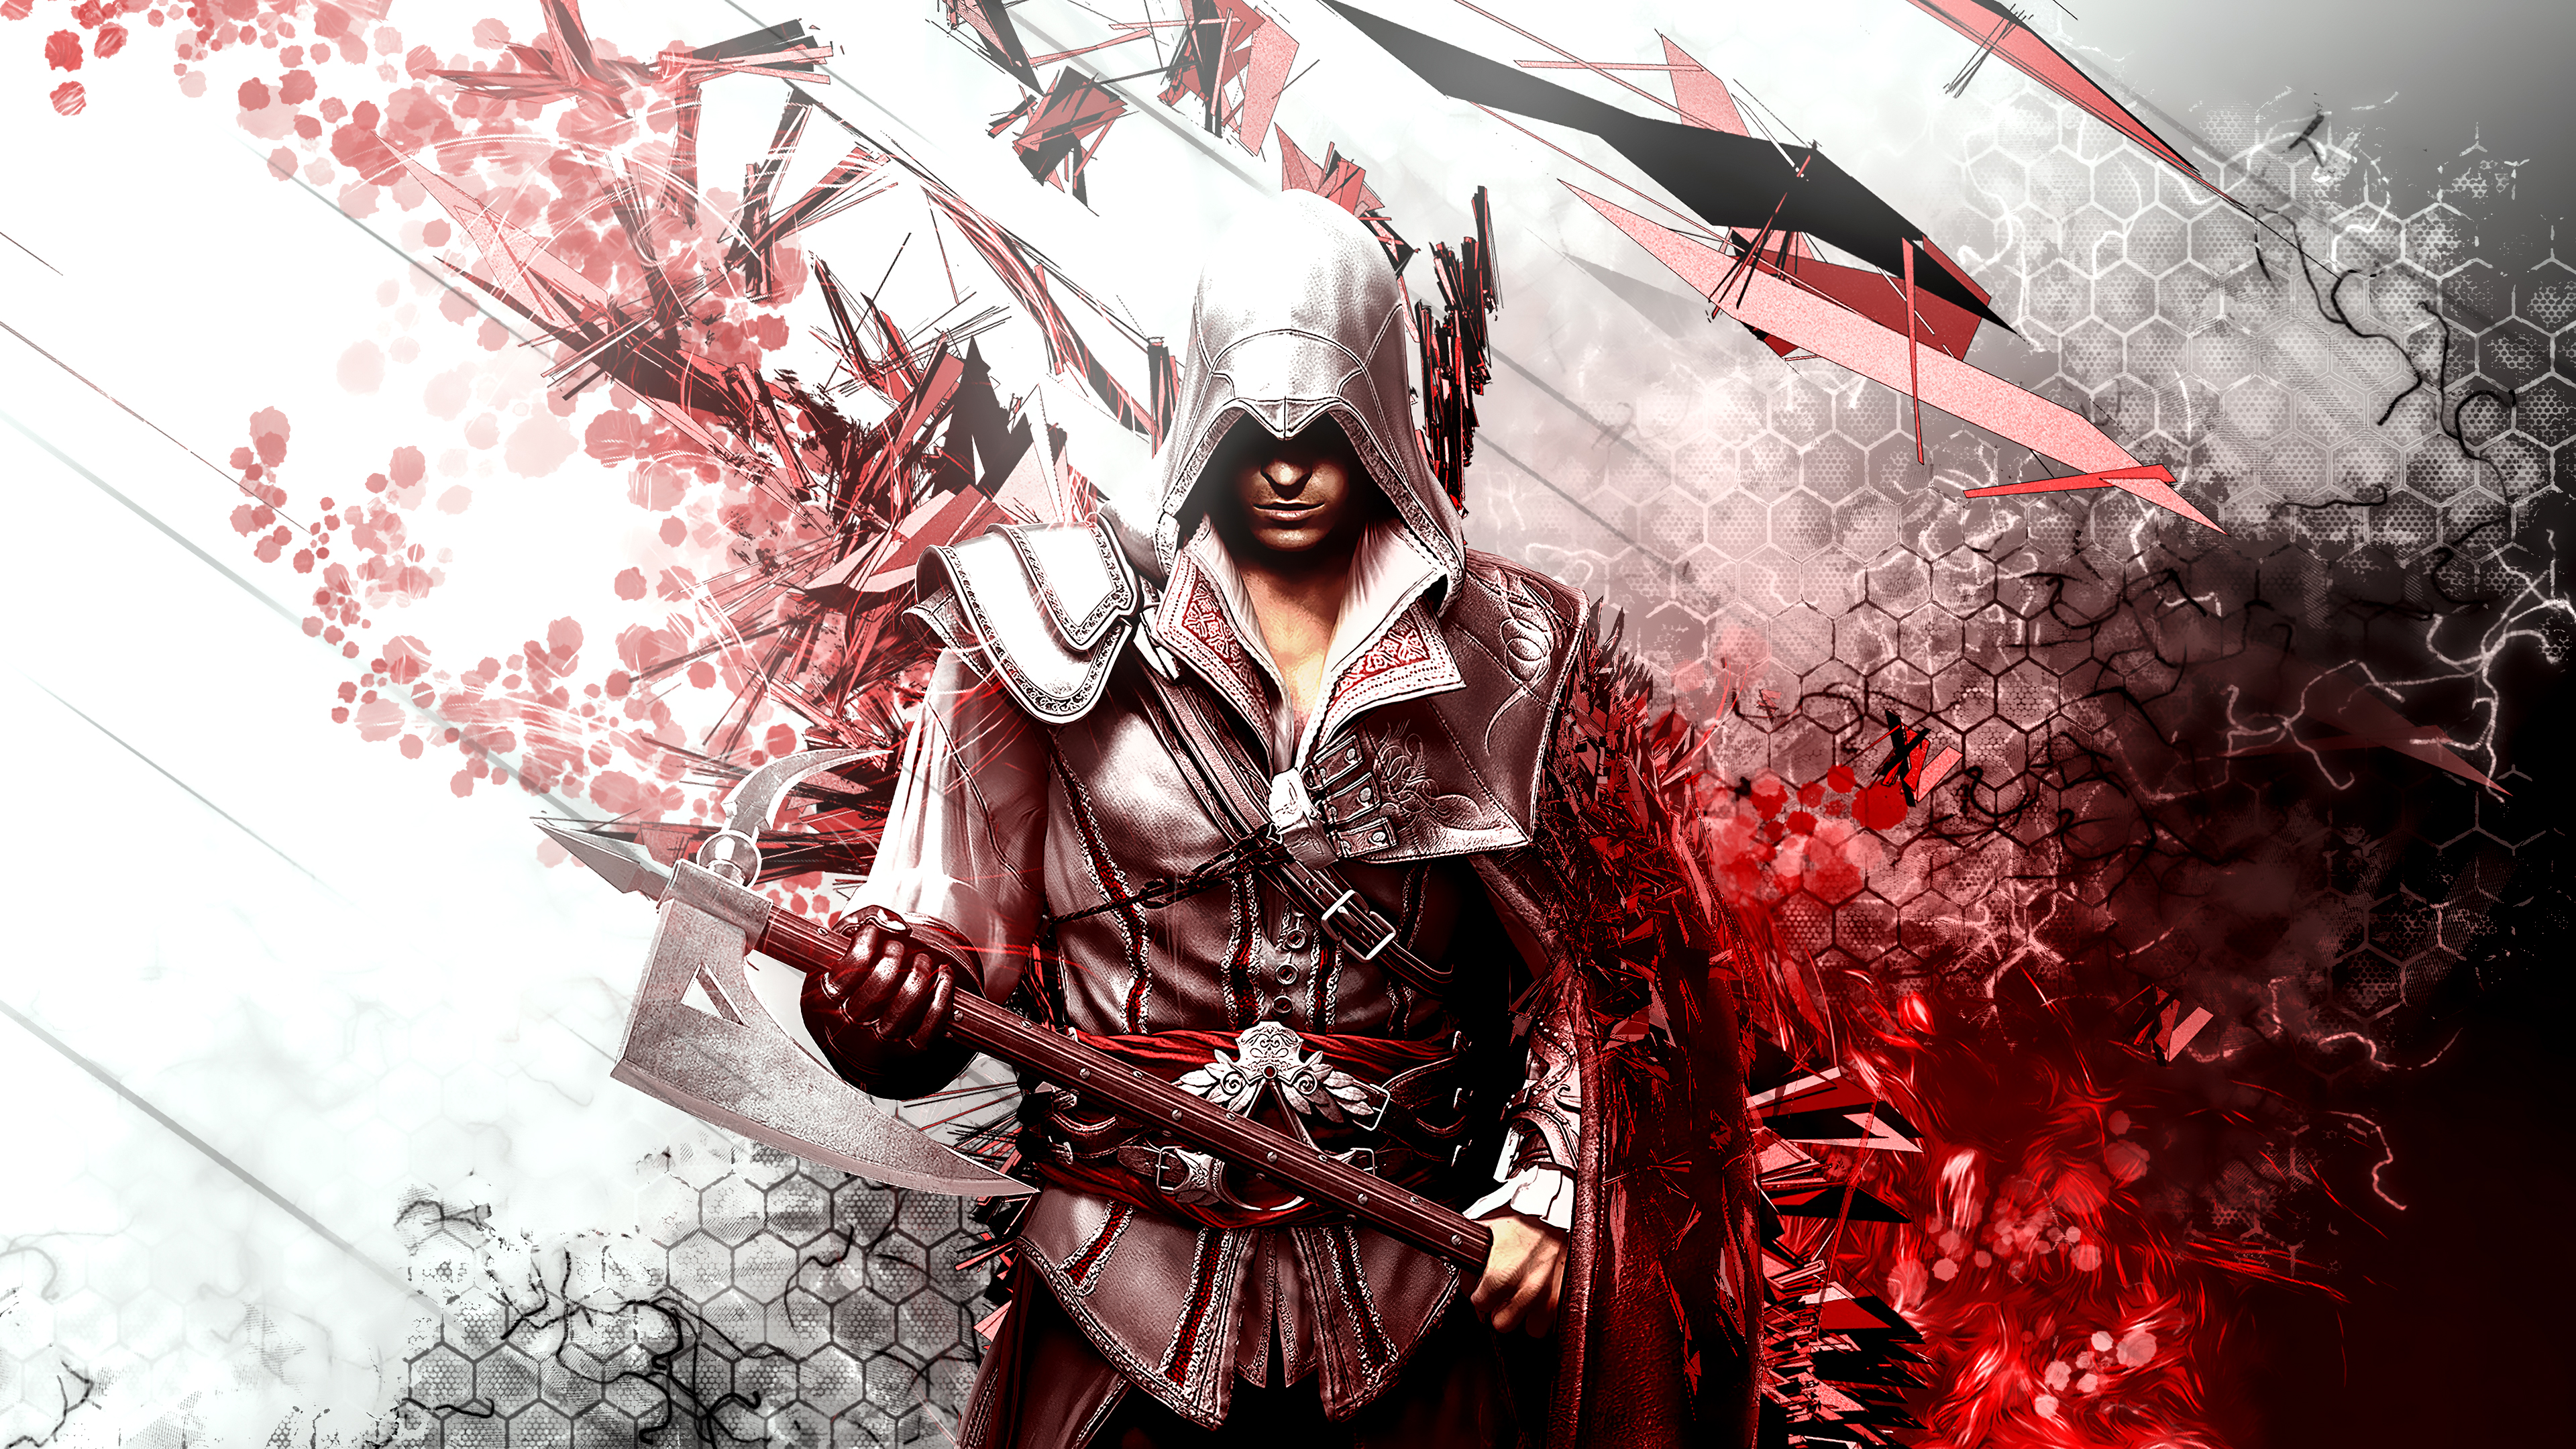 Assassin games 2